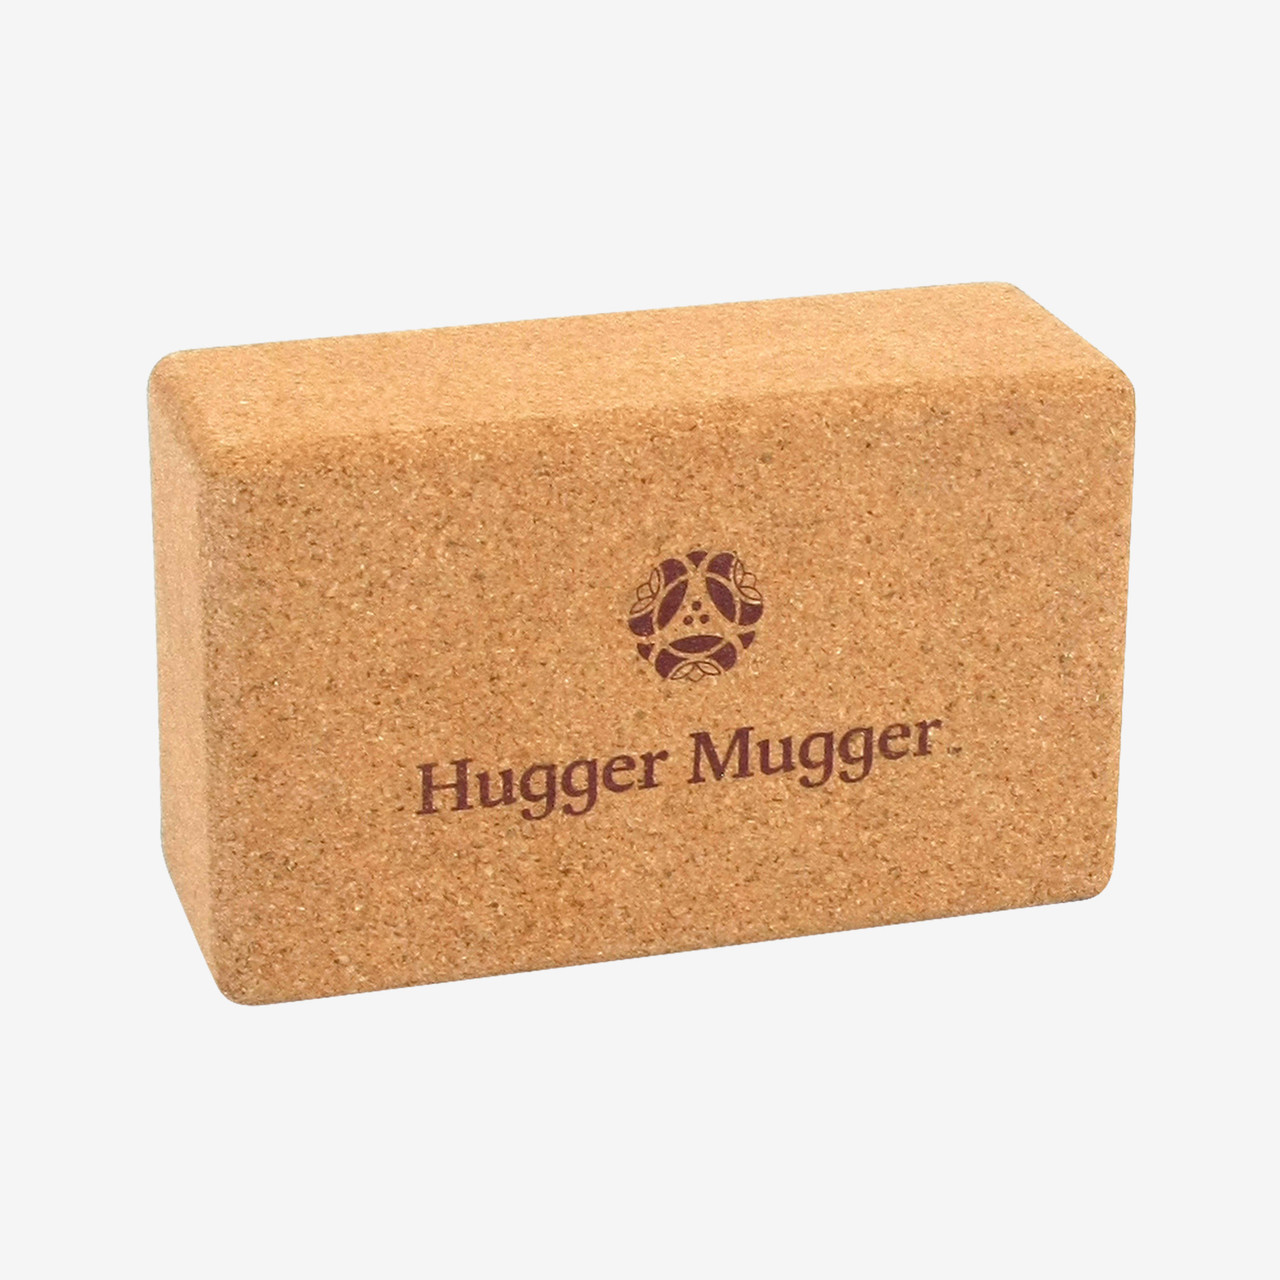 Cork Yoga Block - Hugger Mugger  Eco-Friendly, Natural Grippy Texture